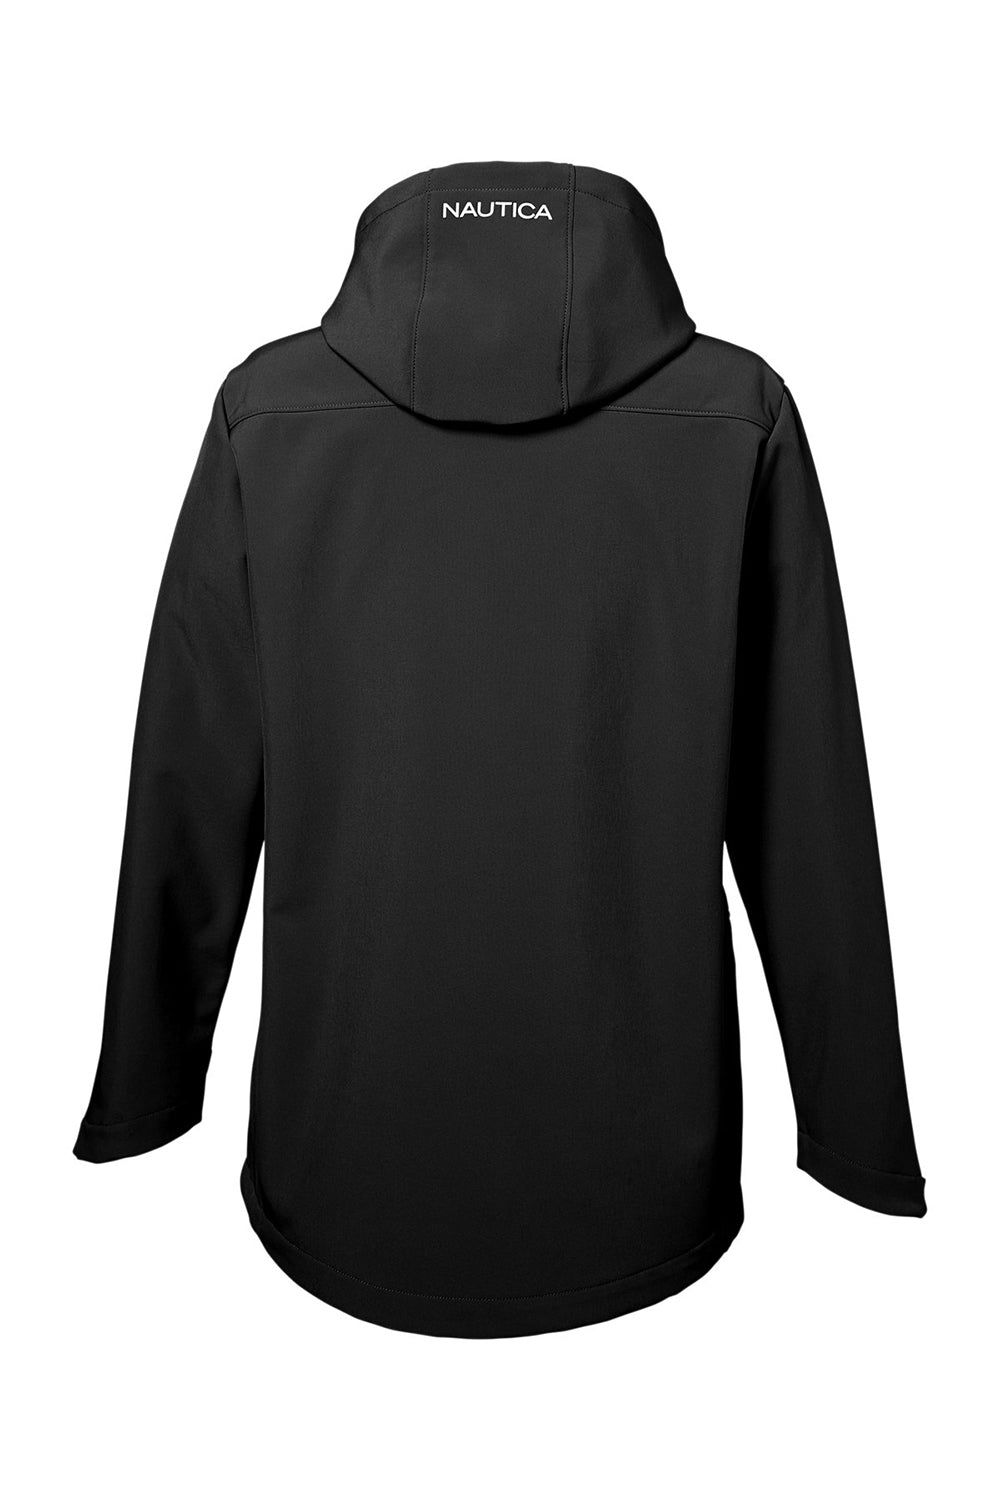 Nautica N17790 Womens Wavestorm Full Zip Hooded Jacket Black Flat Back